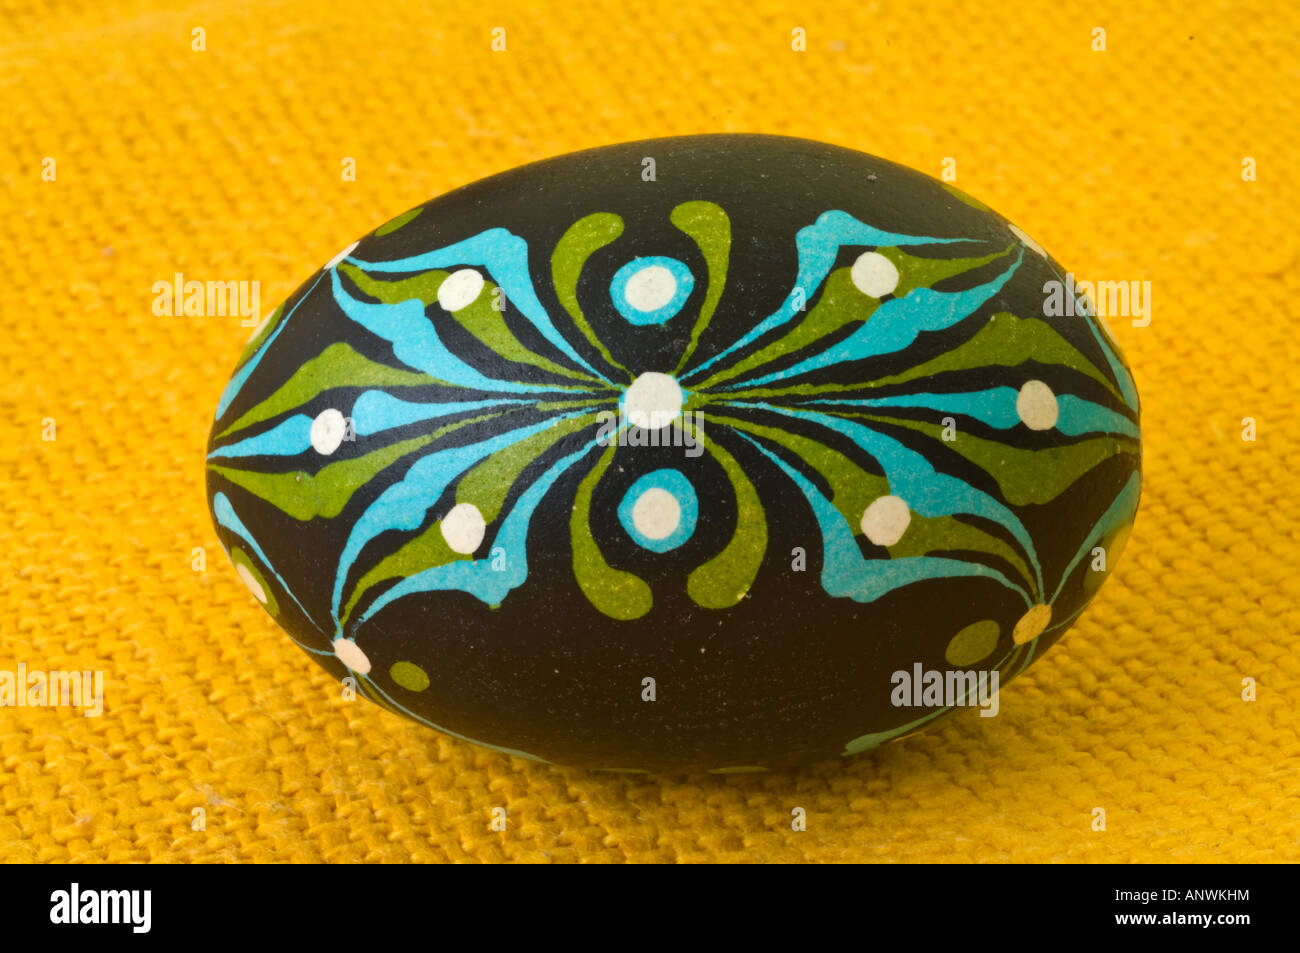 Easter Egg decorated using batik method by Krystyna Majewska from Gdansk, Poland Stock Photo